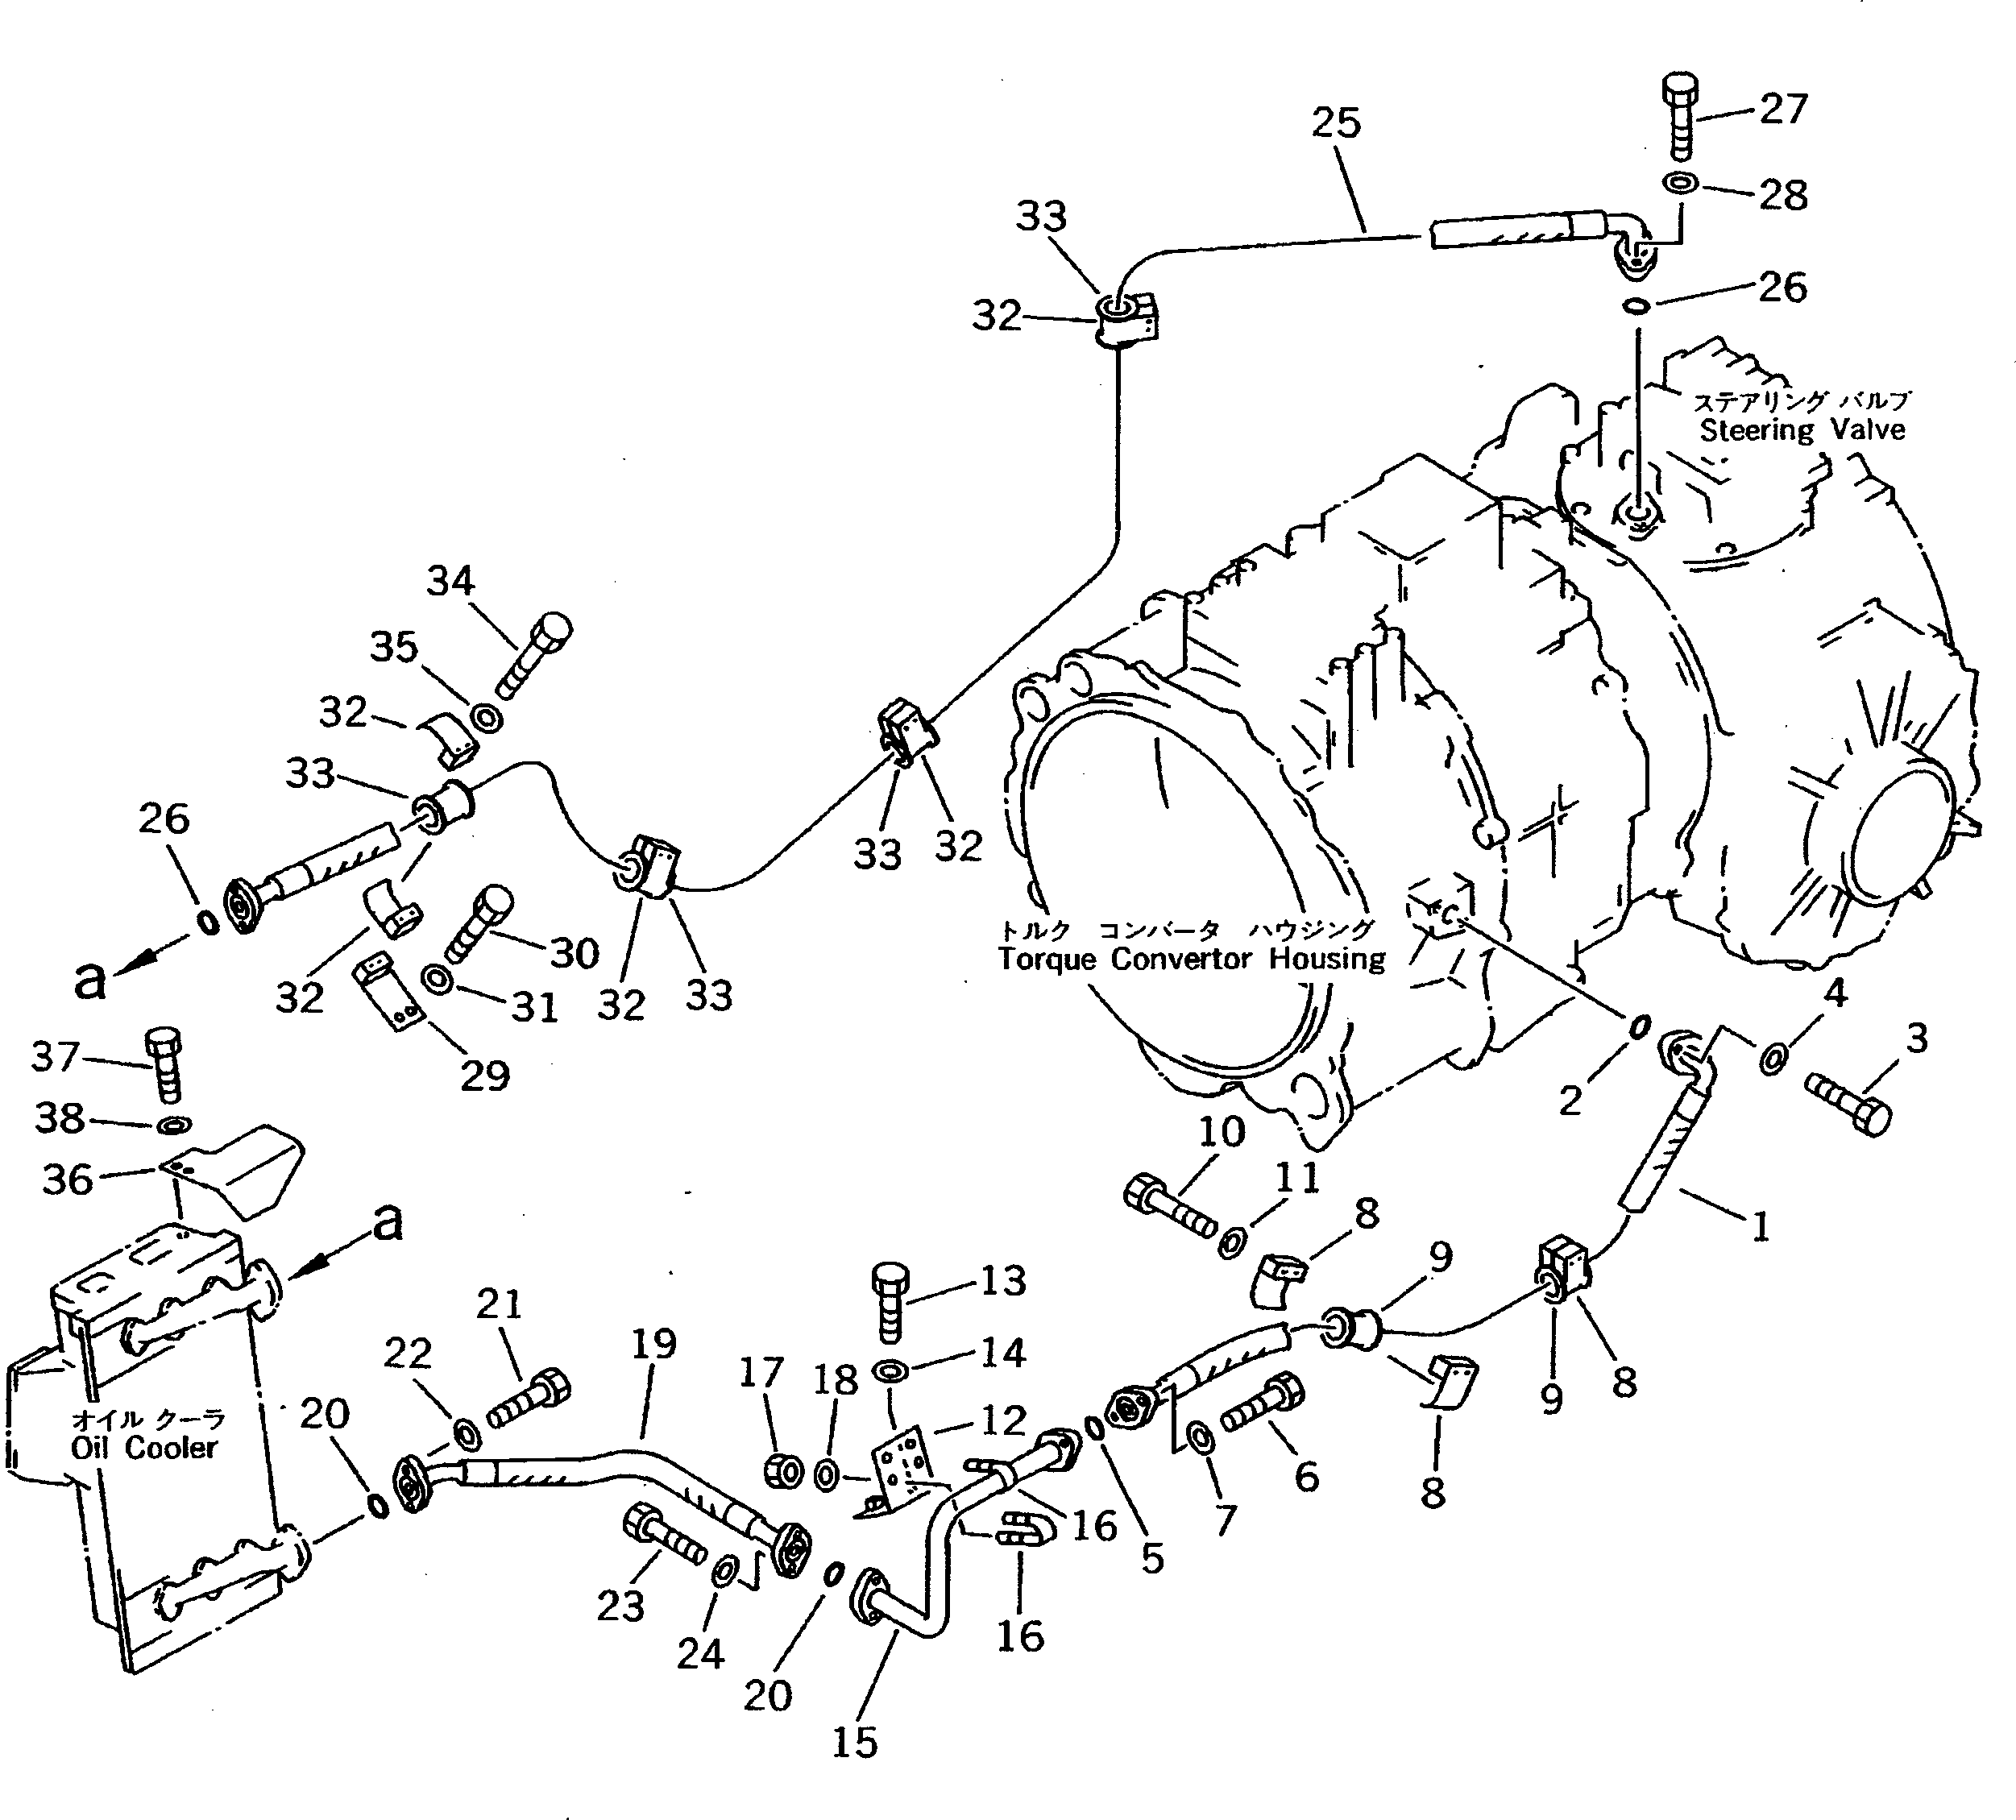 50. OIL COOLER AND OIL LINE (2/2) [C0400-02A0] - Komatsu part D275A-2 S/N 10001-UP [d275a-2c]